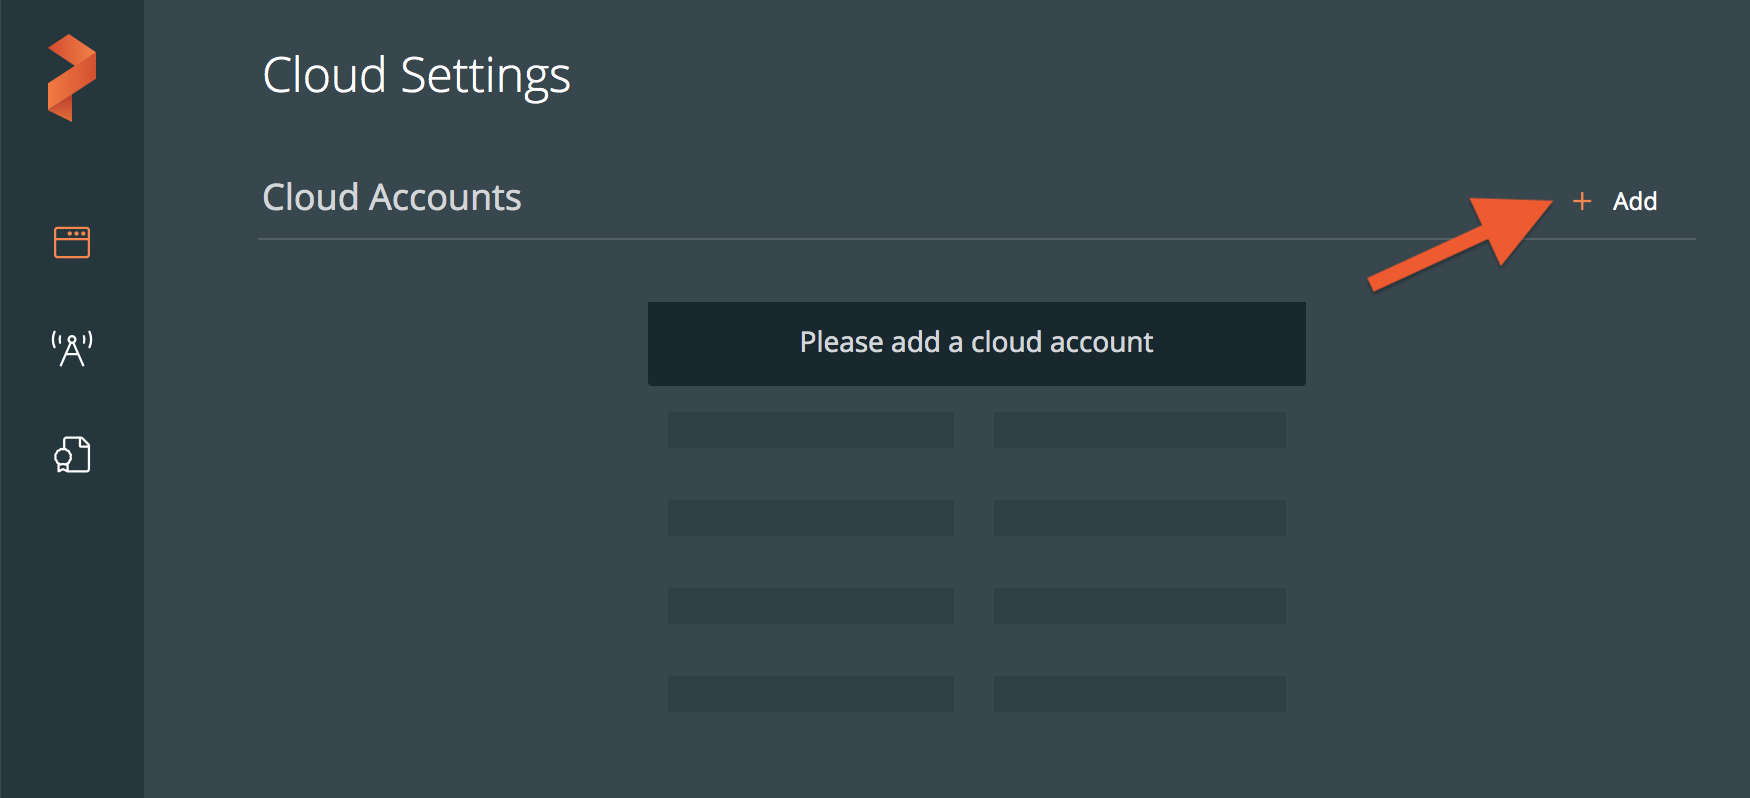 Add a new cloud account